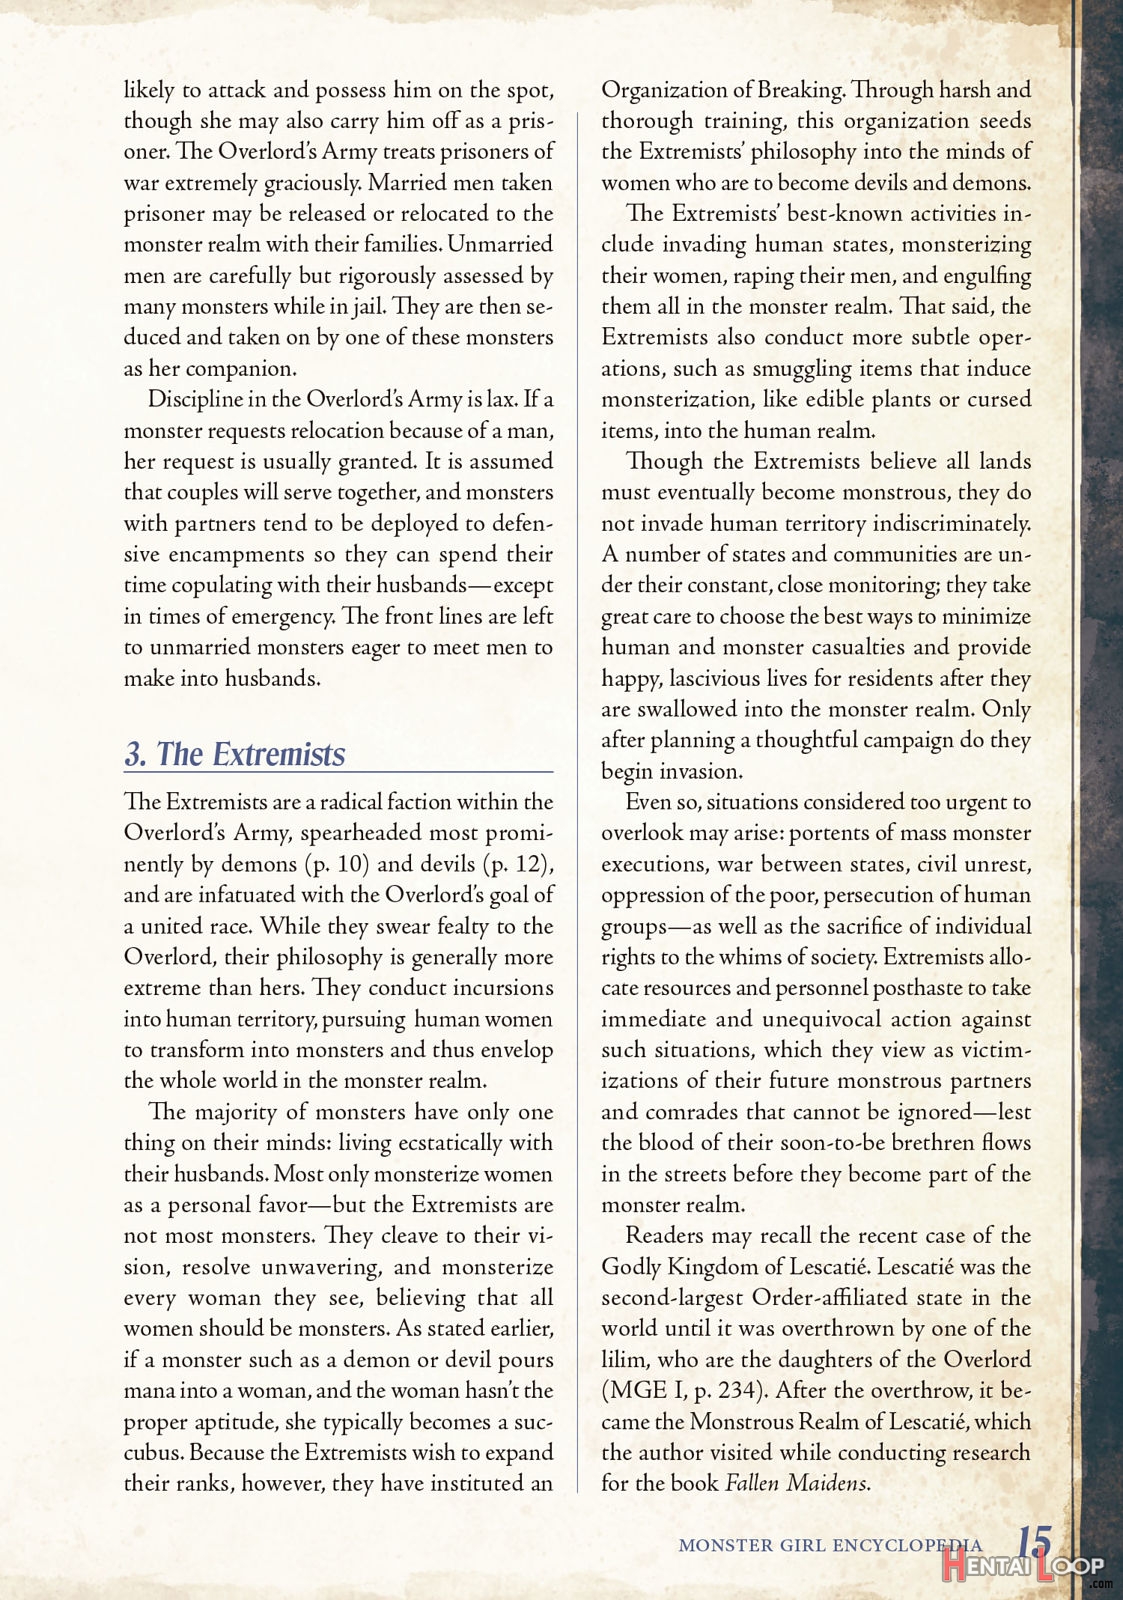 Monster Girl Encyclopedia Vol. 2 page 16